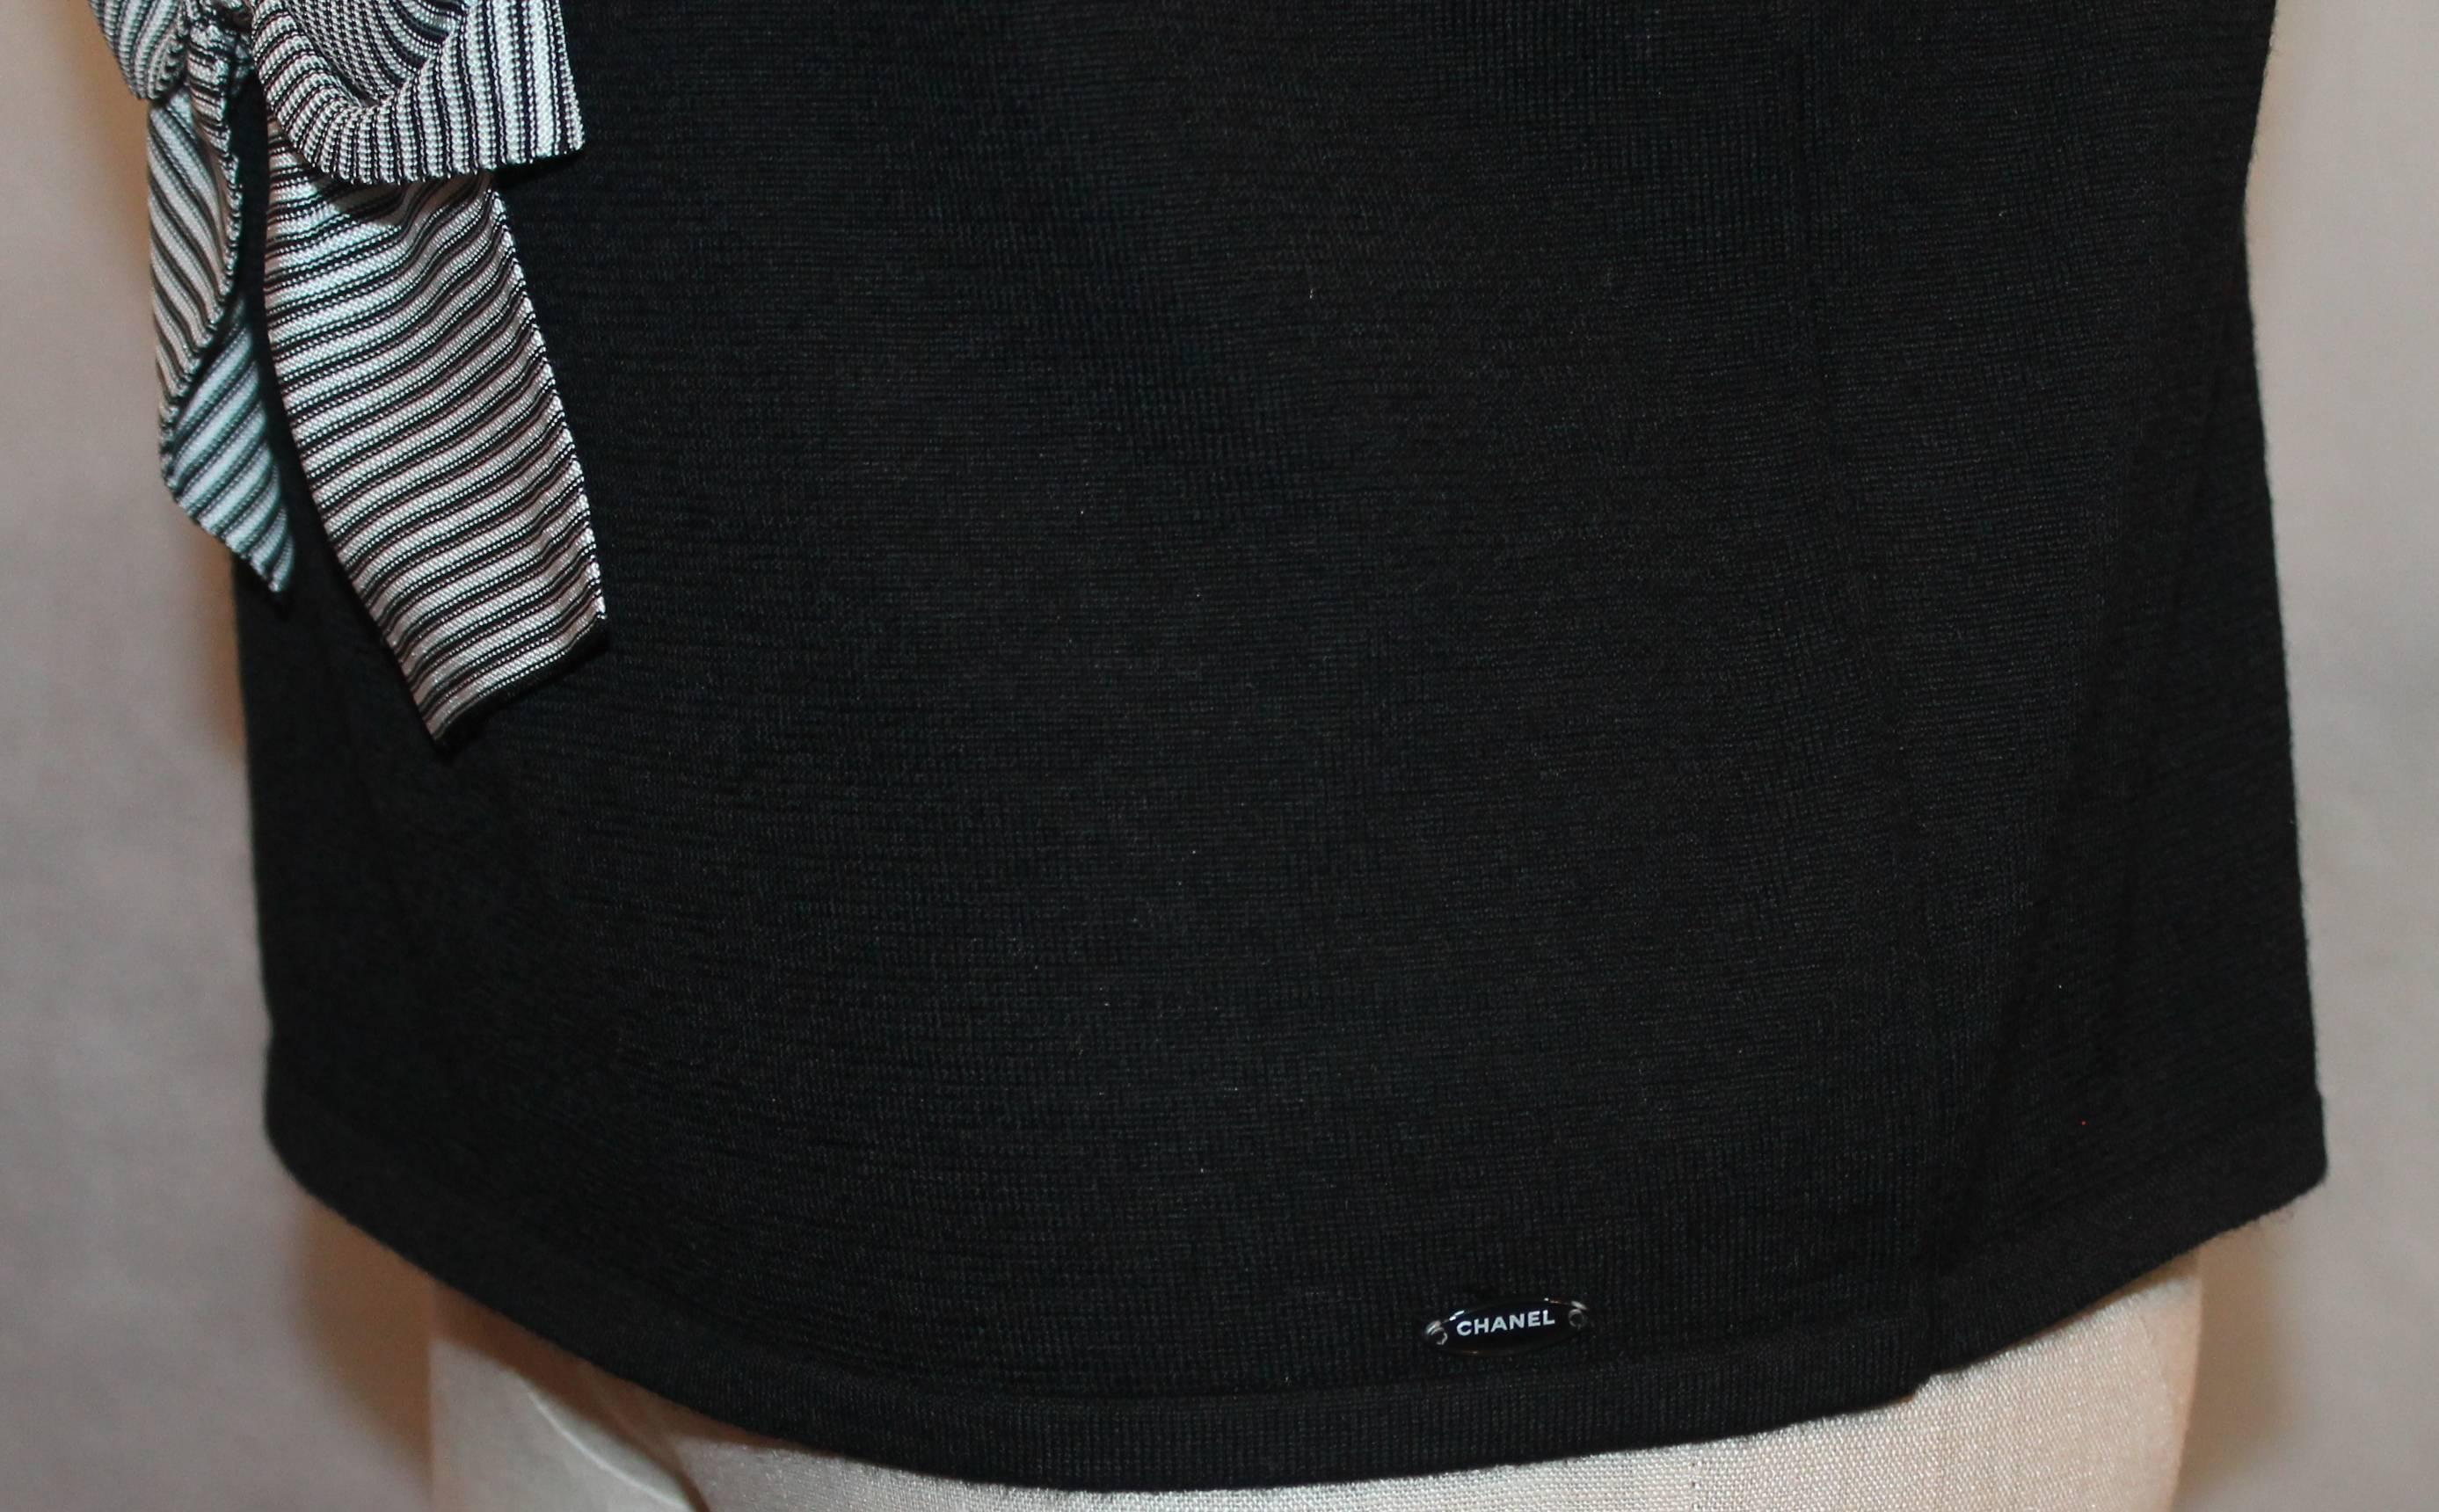 Chanel 2007 Black Cashmere & Silk Top w/ Bow & Chain Detail - 40  3